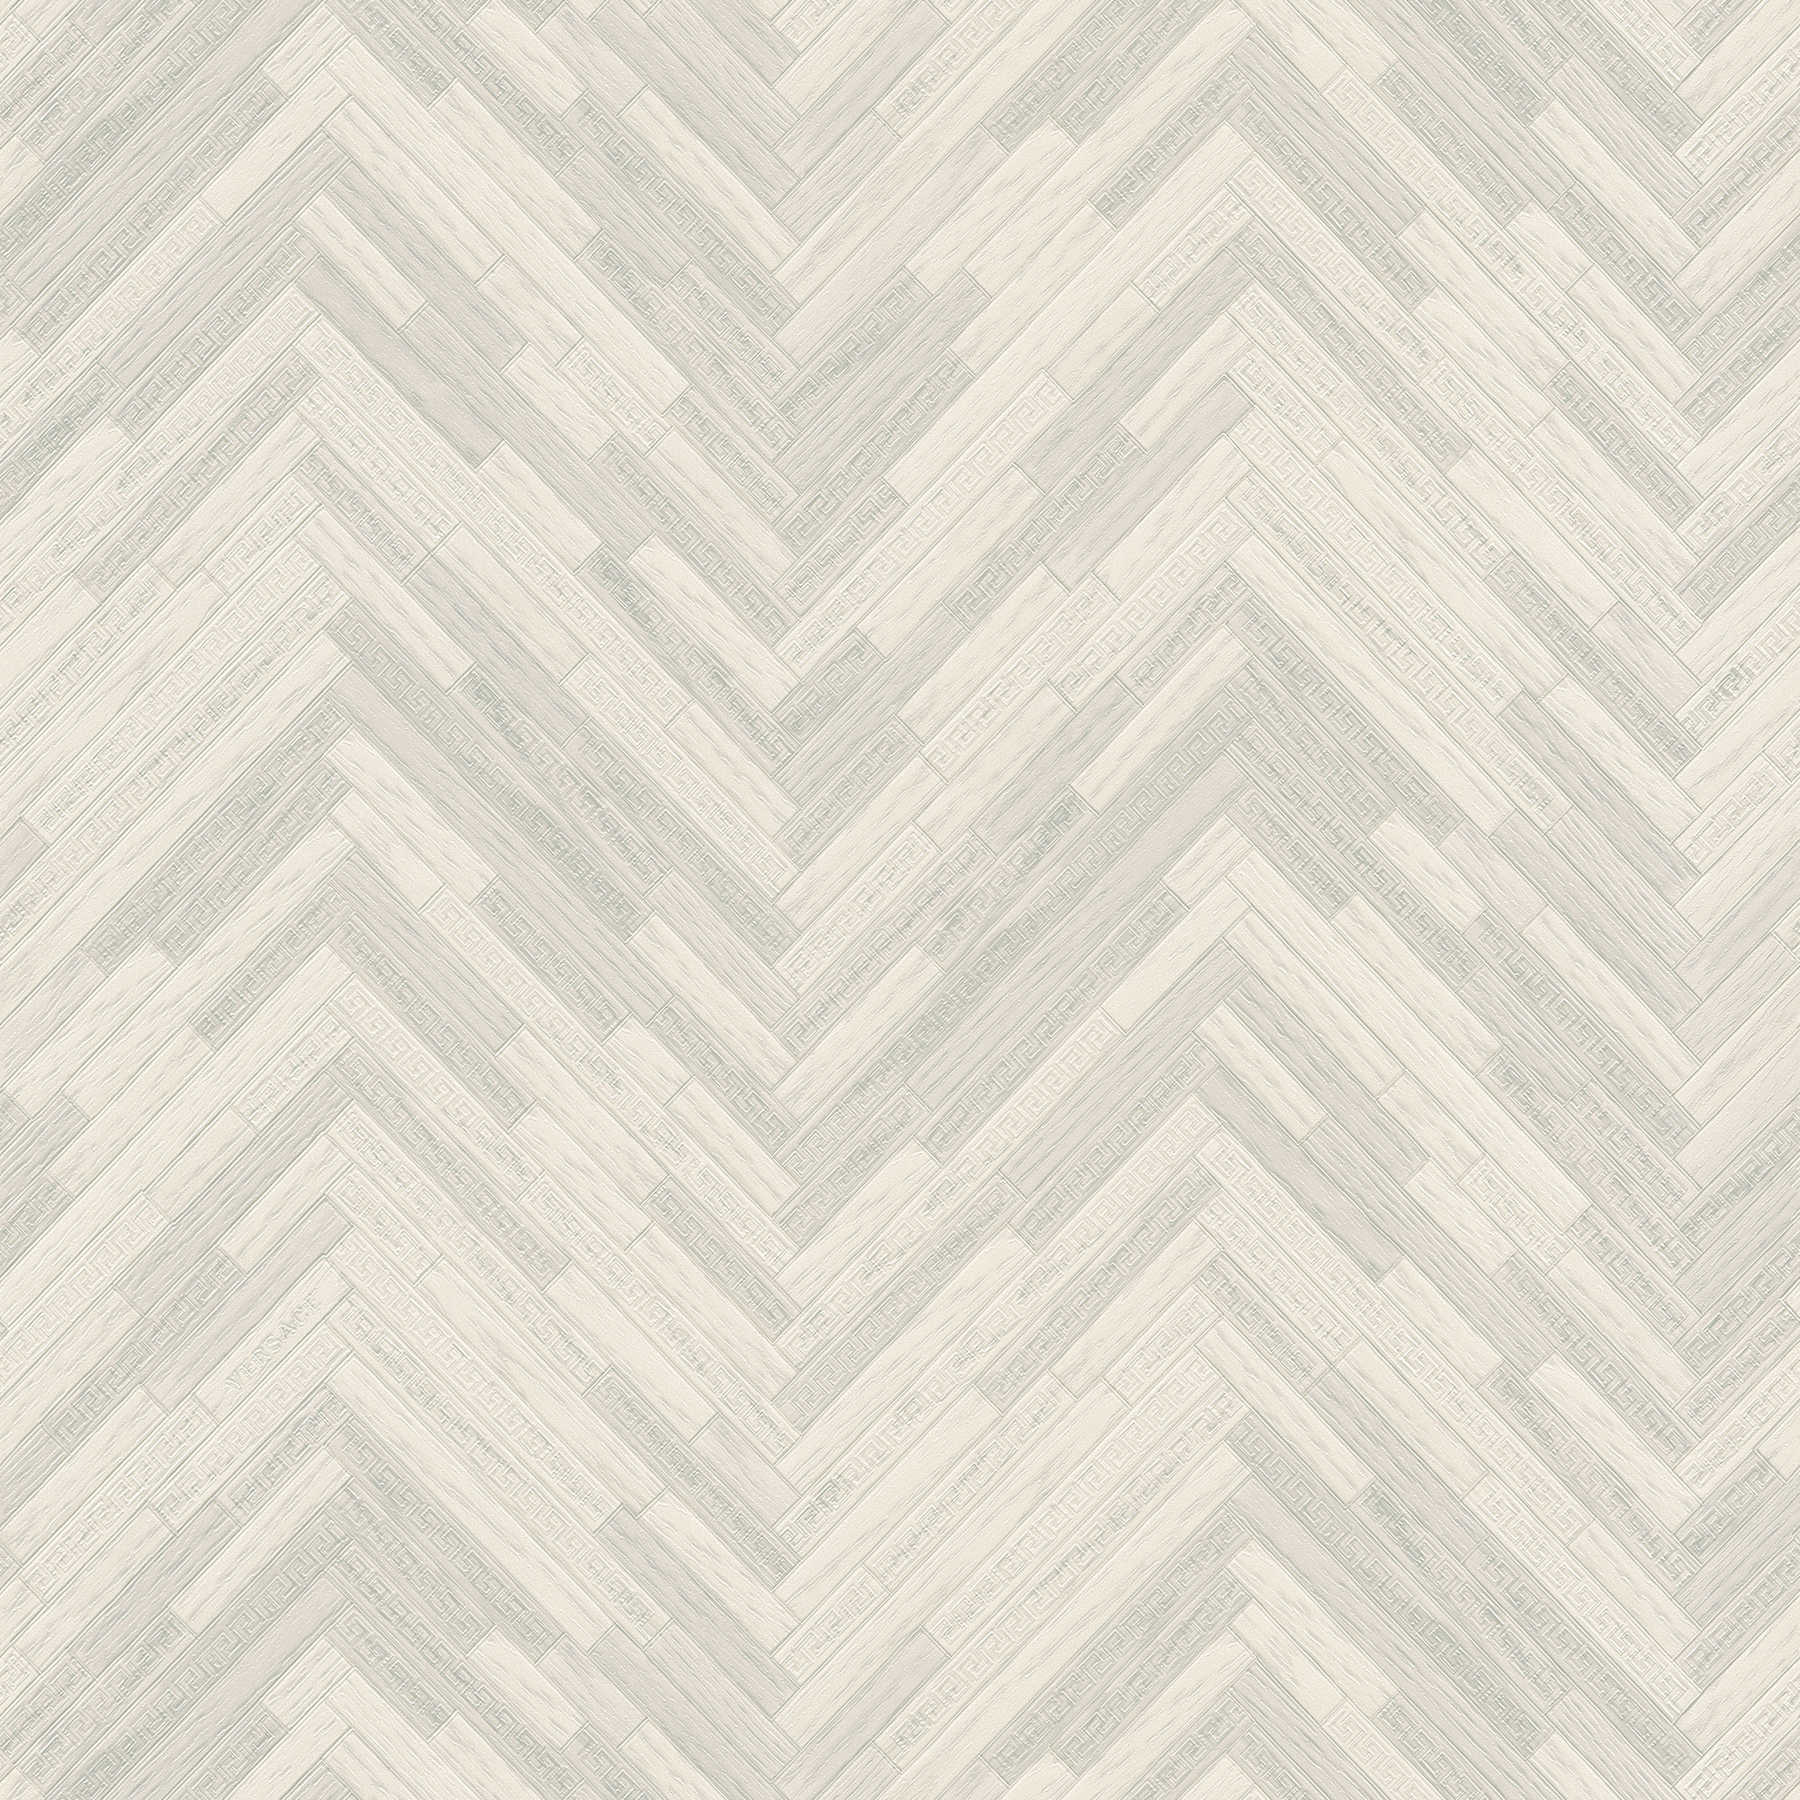 VERSACE Home Tapete elegante Holzoptik – Grau, Weiß
